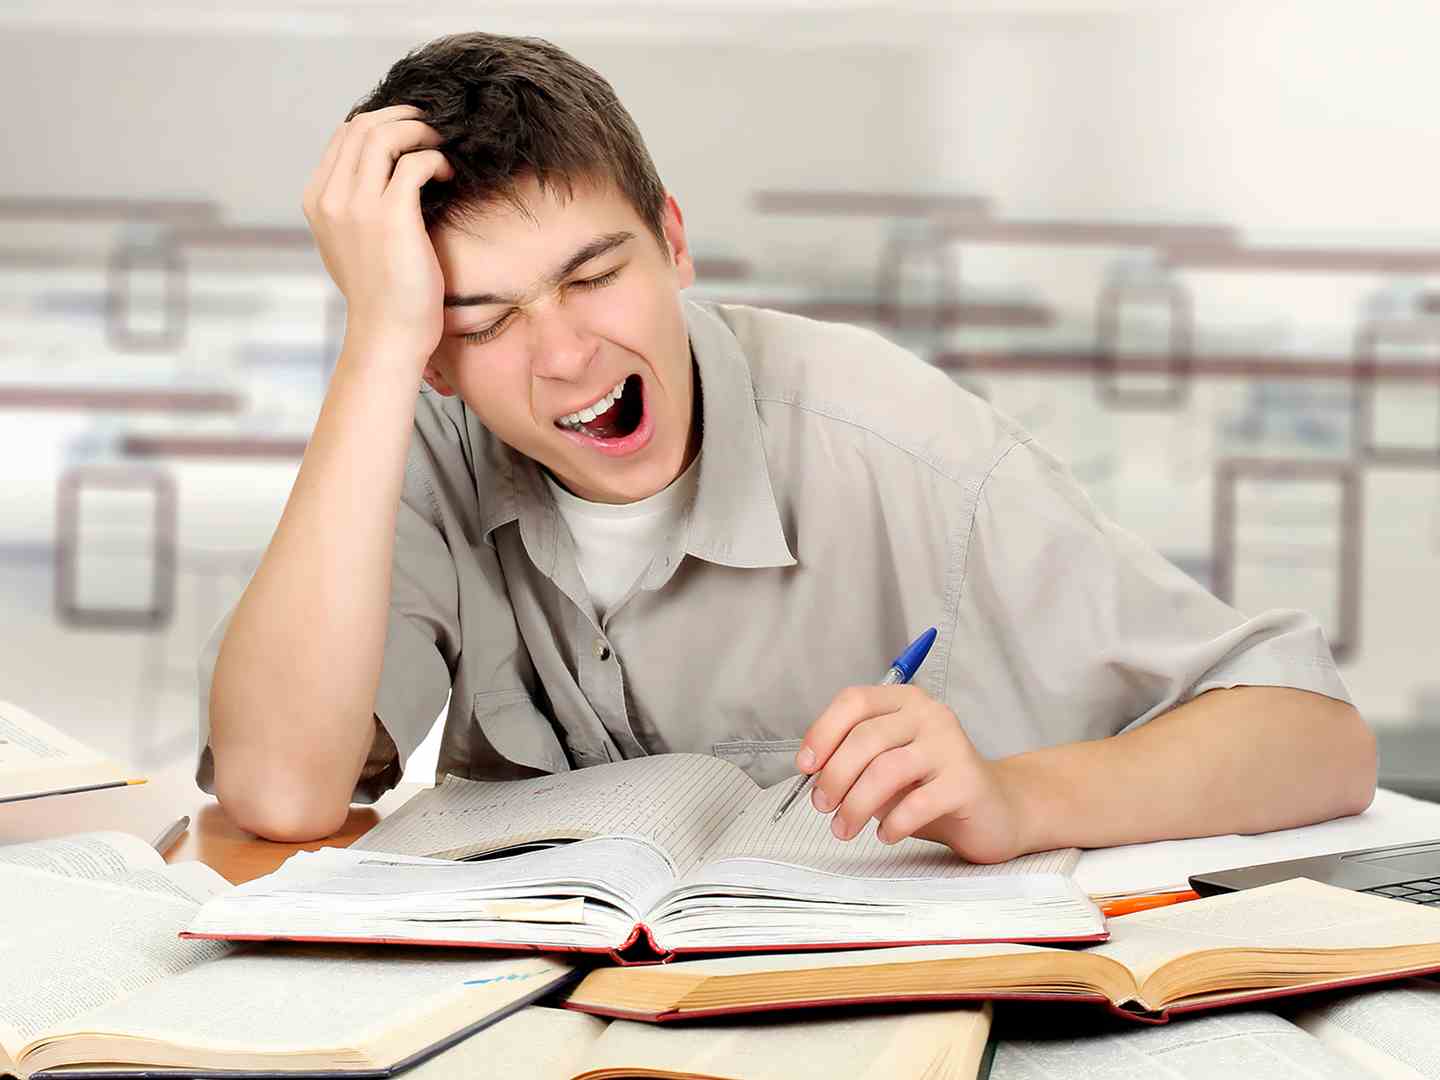 Really exhausted. Студент зевает. Зевает на уроке. Усталый студент. Студент устал.